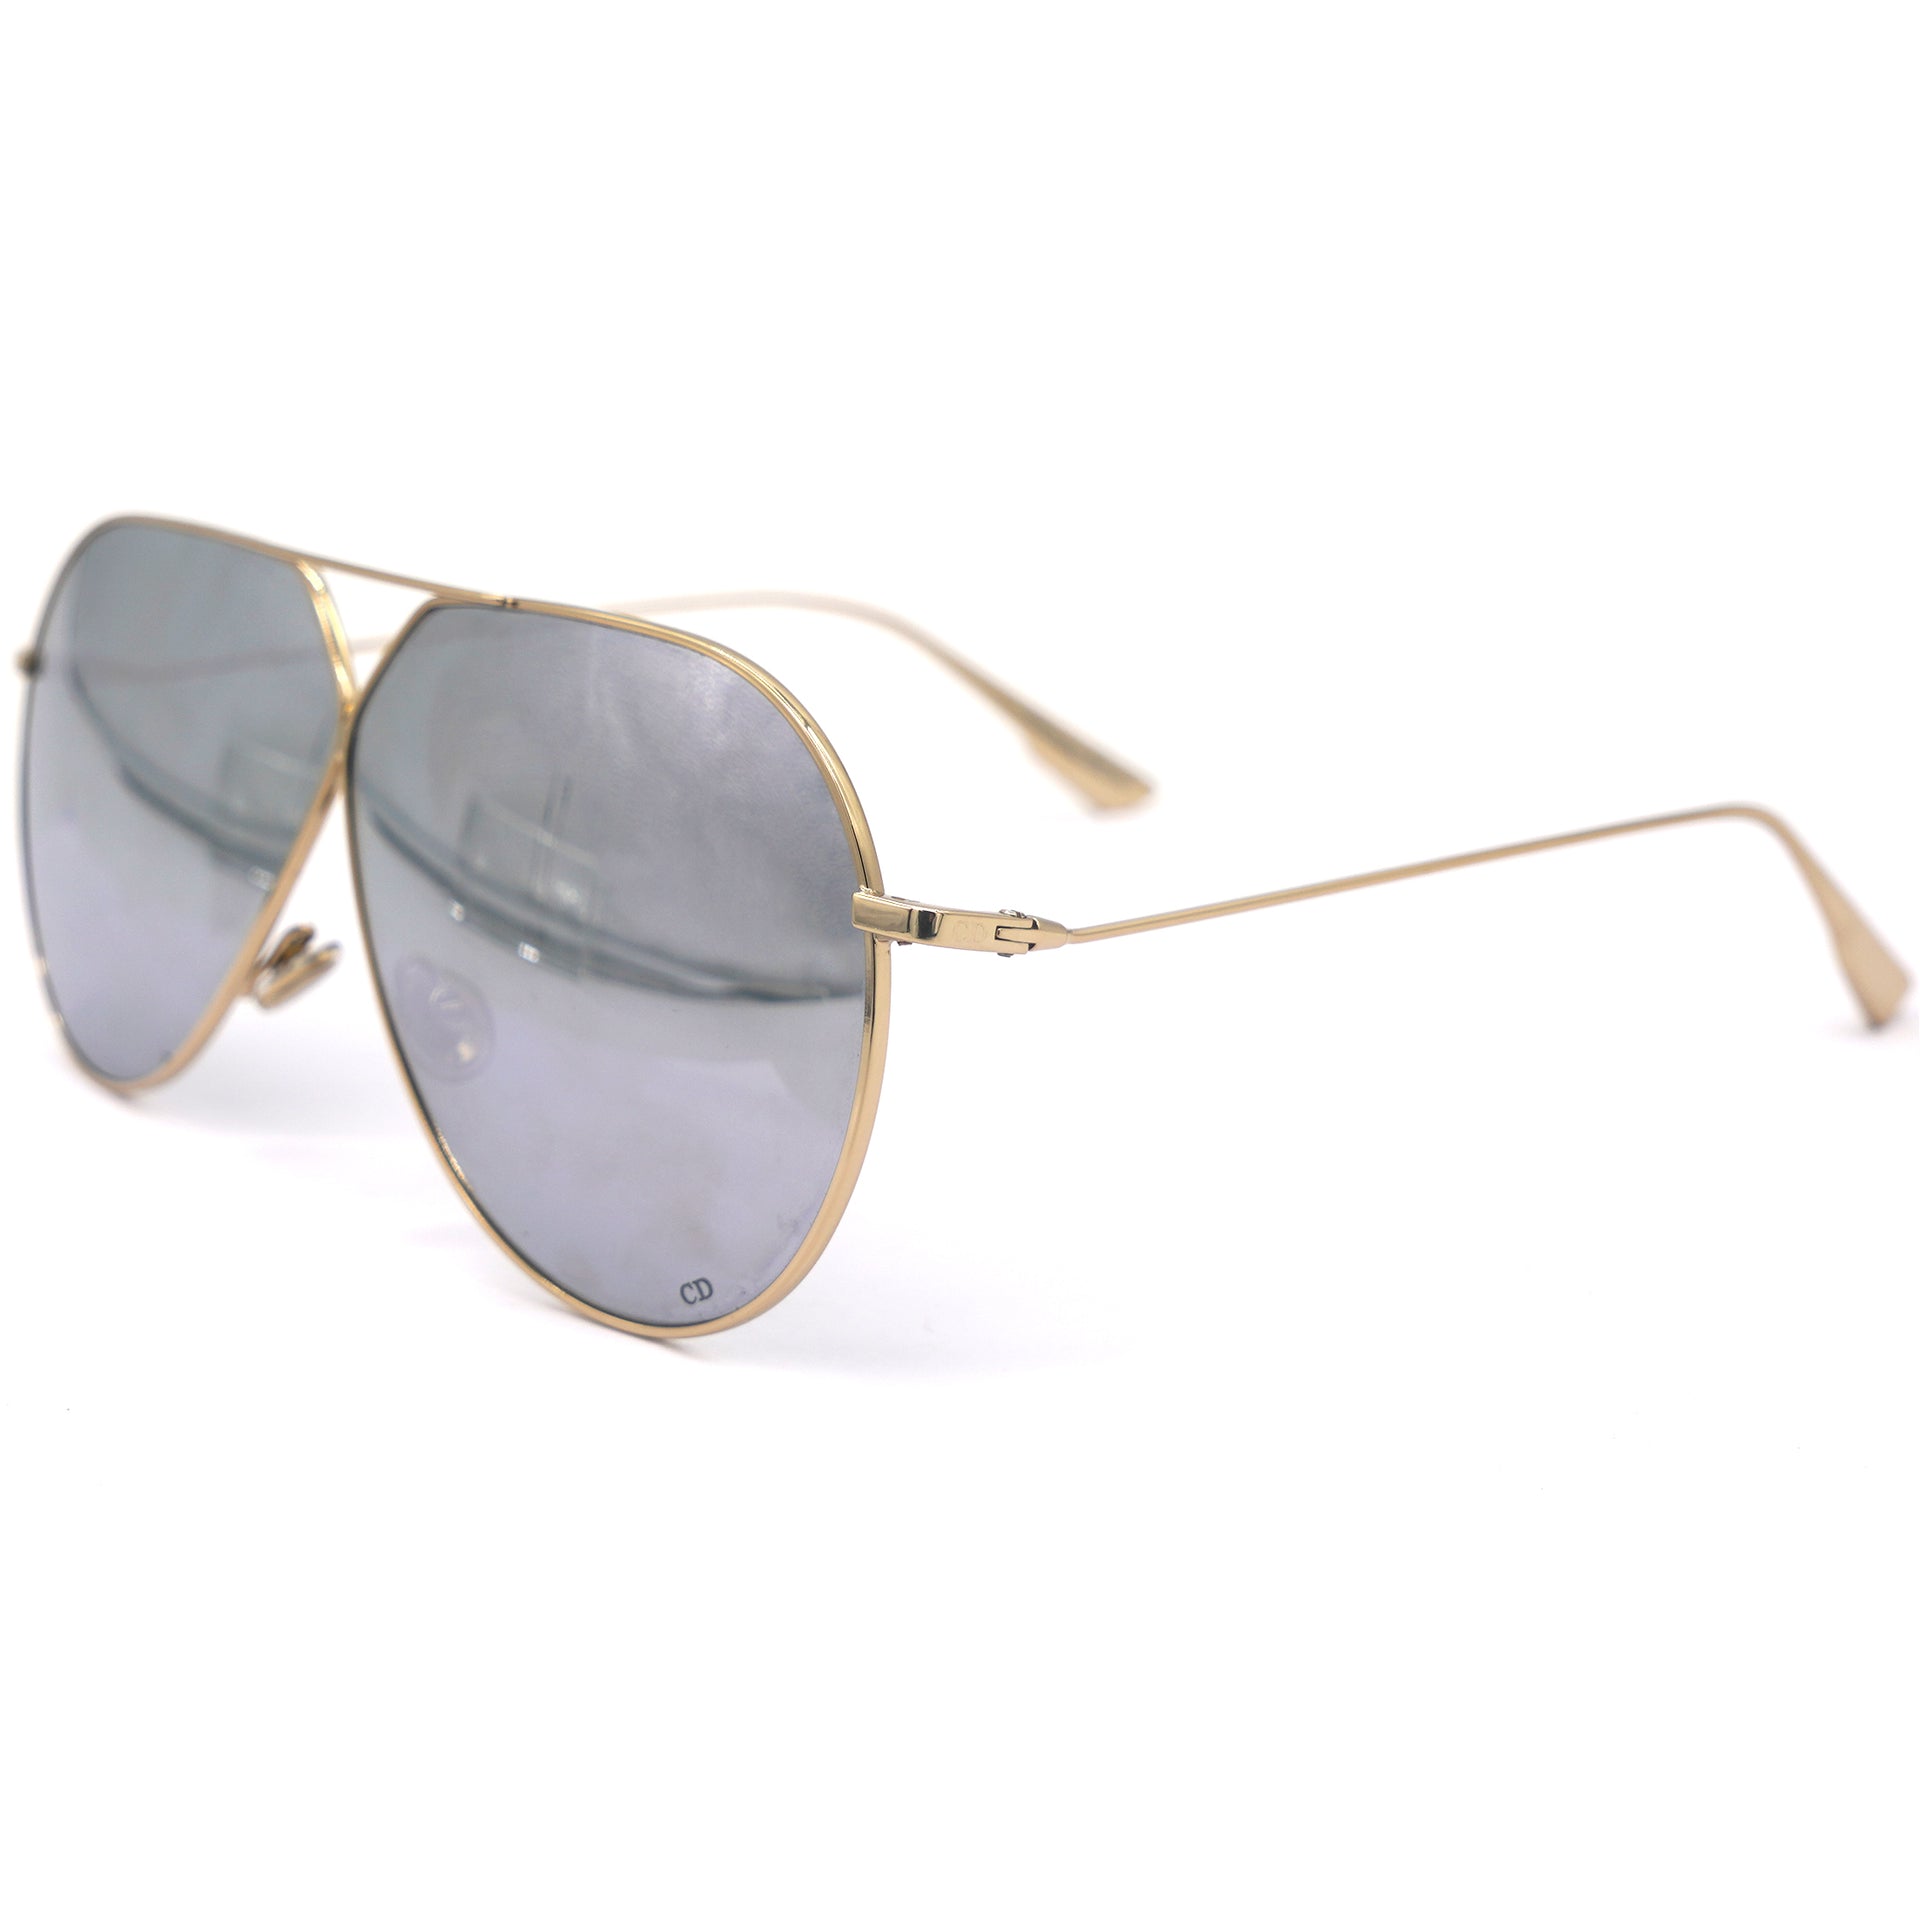 DIOR Split 1 Gold amp Grey Aviator Mirrored Gold Sunglasses 000DC 5914  145  eBay